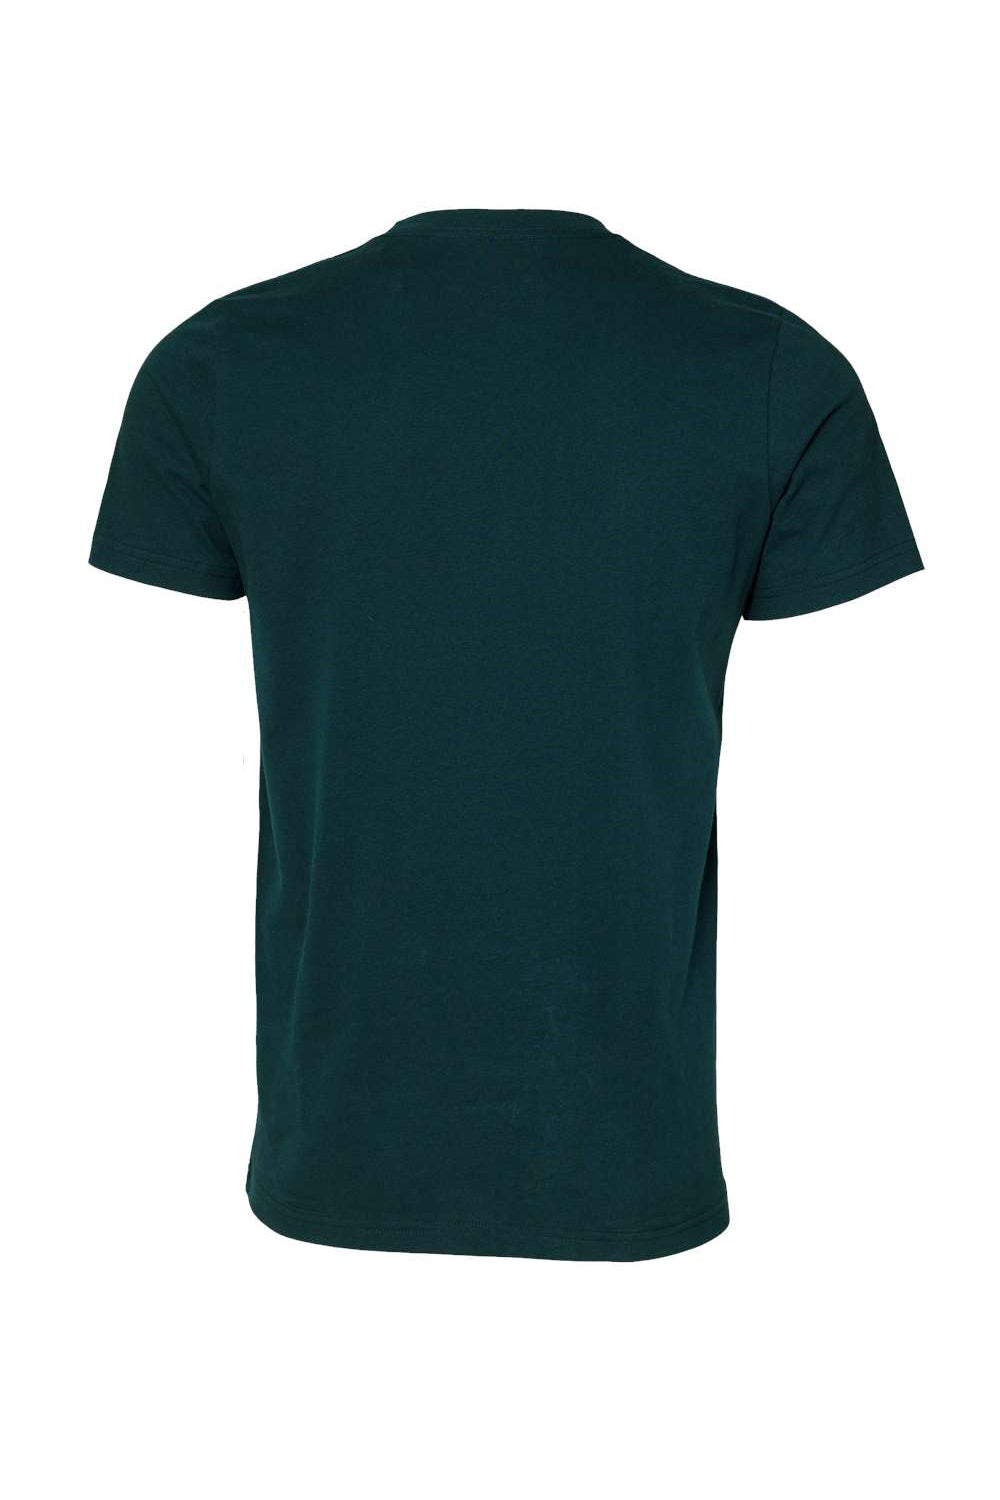 Bella + Canvas BC3001/3001C Mens Jersey Short Sleeve Crewneck T-Shirt Atlantic Blue Flat Back